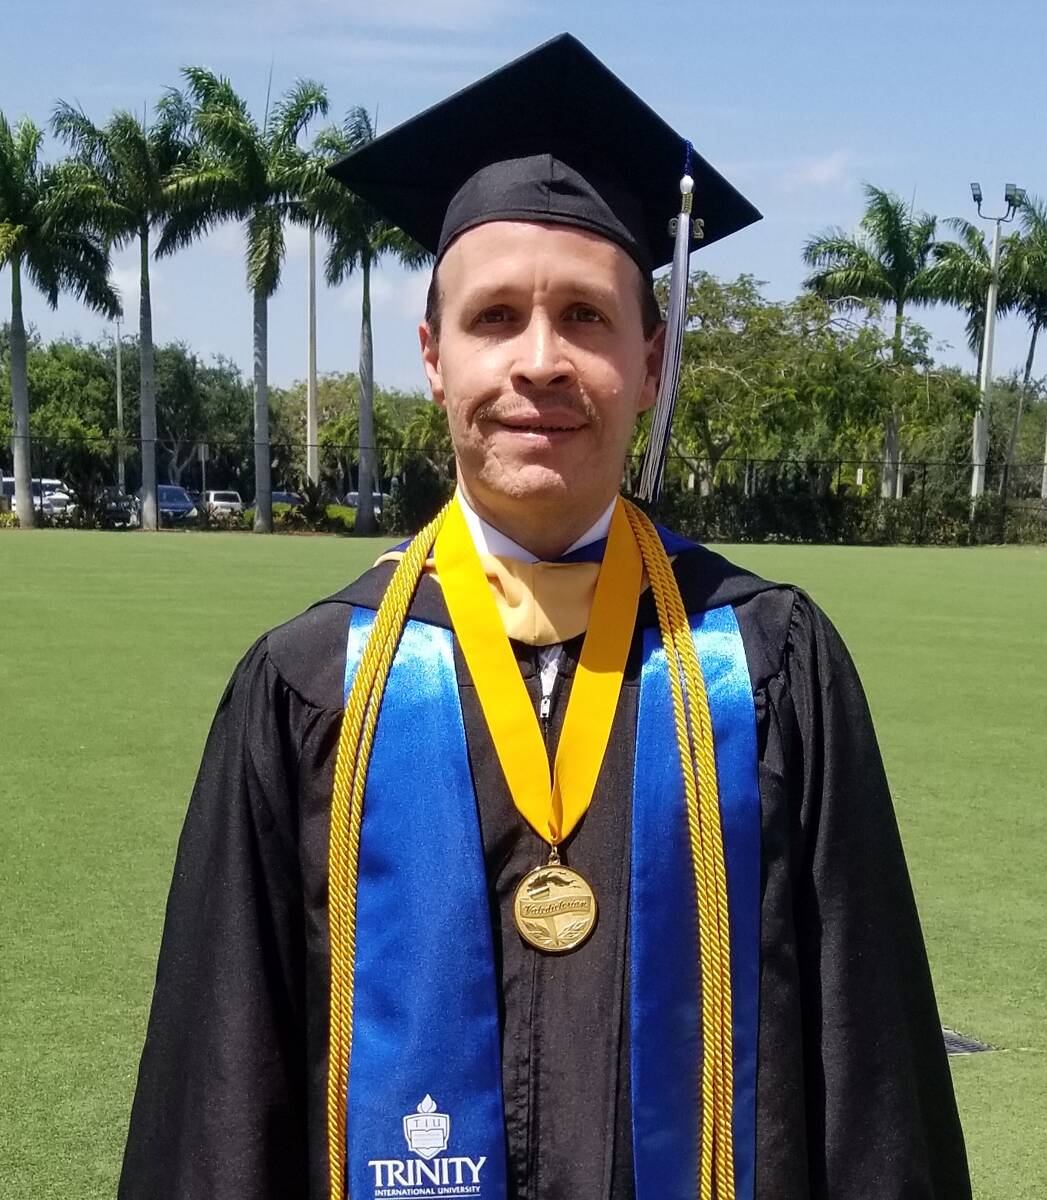 Jose Fontenez at Trinity Florida graduation